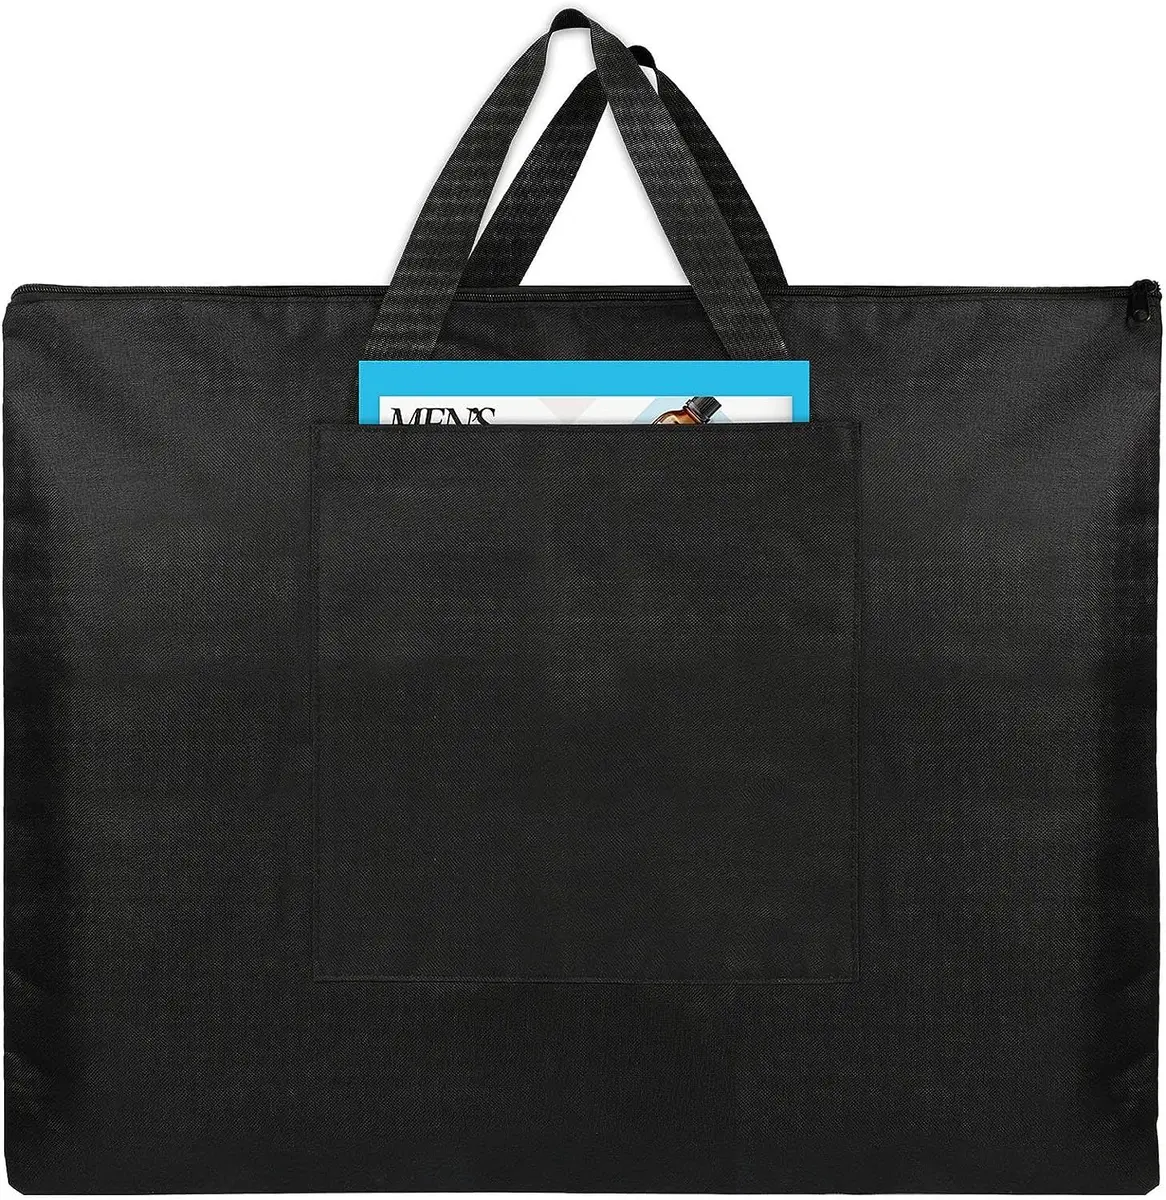 Portable Art Portfolio Bag, Posters Storage Bag With Zipper